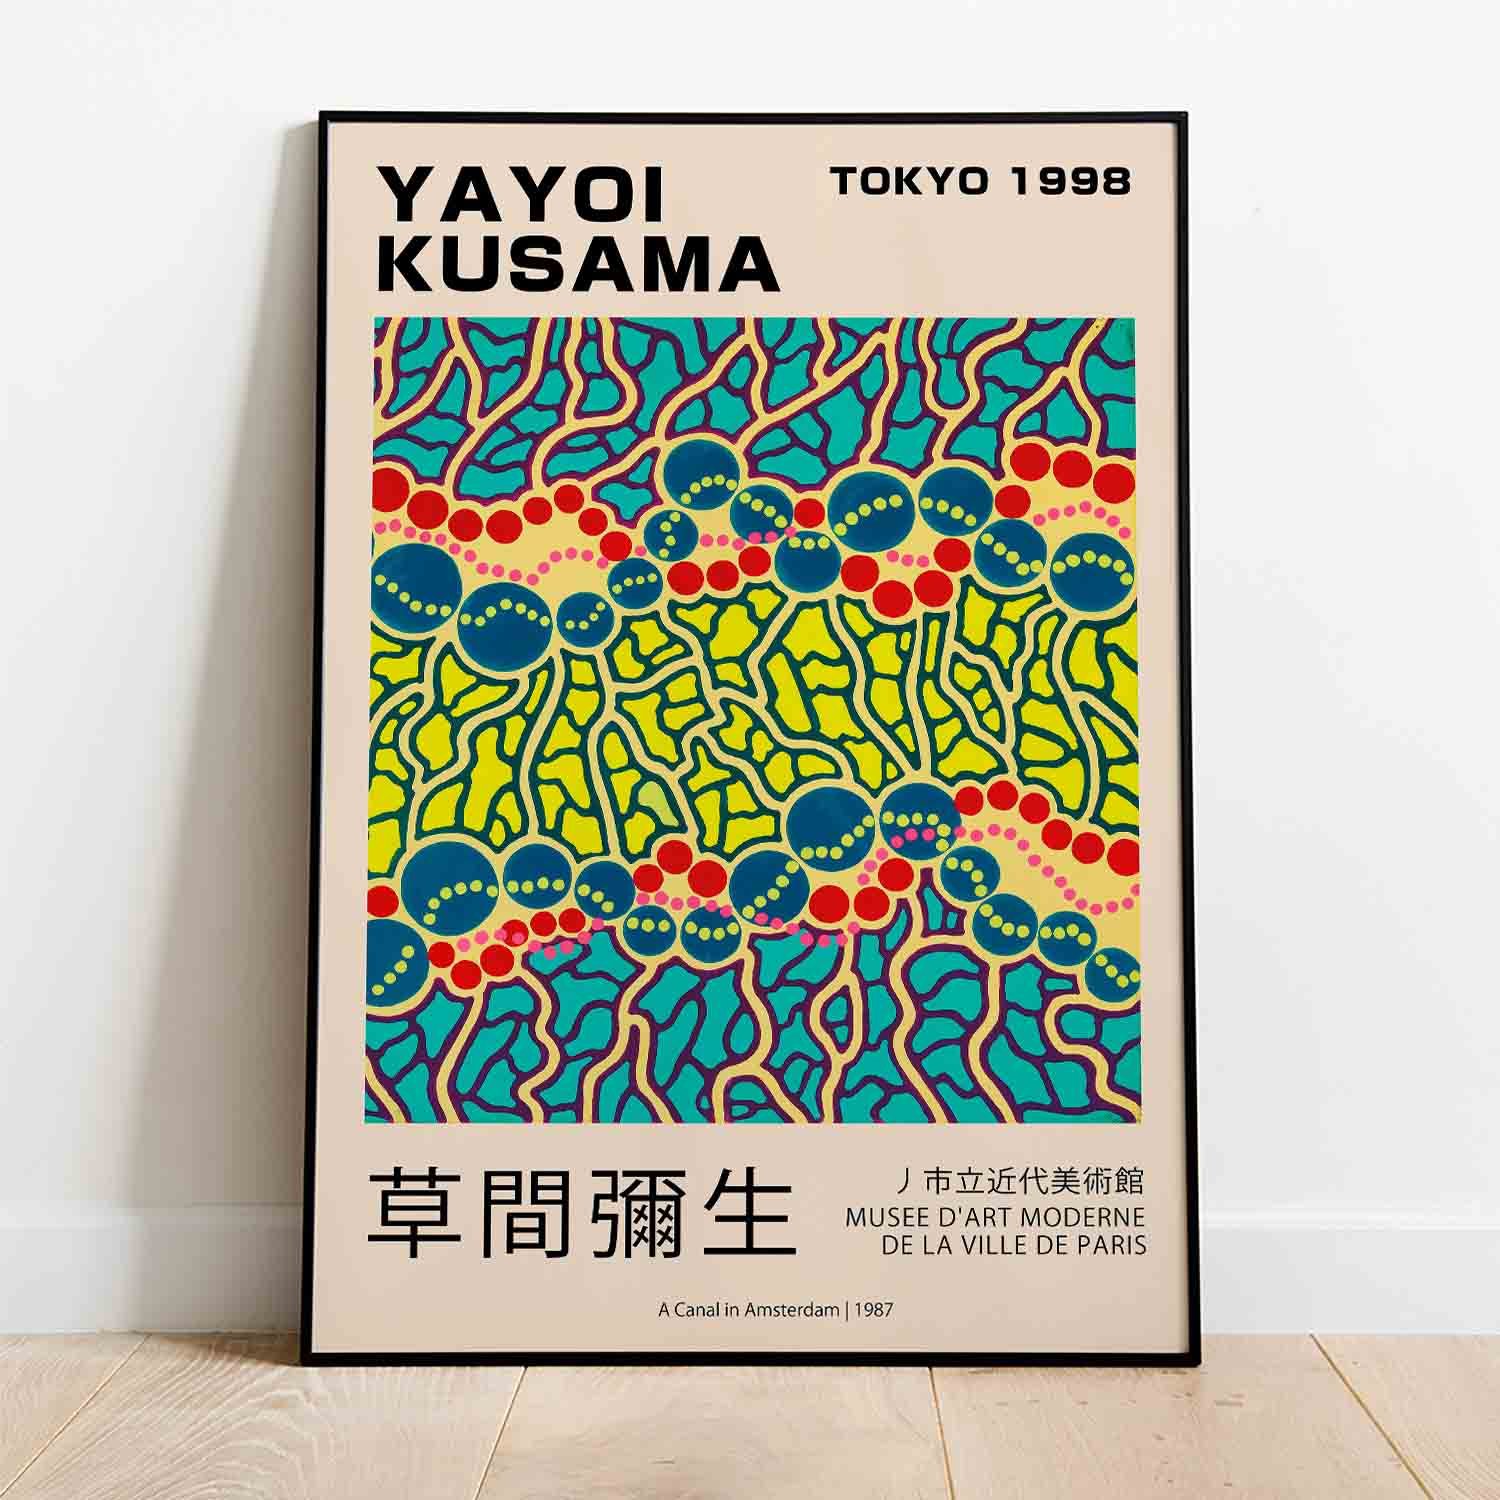 The alchemist of polka dots, Yayoi Kusama creates a vision of